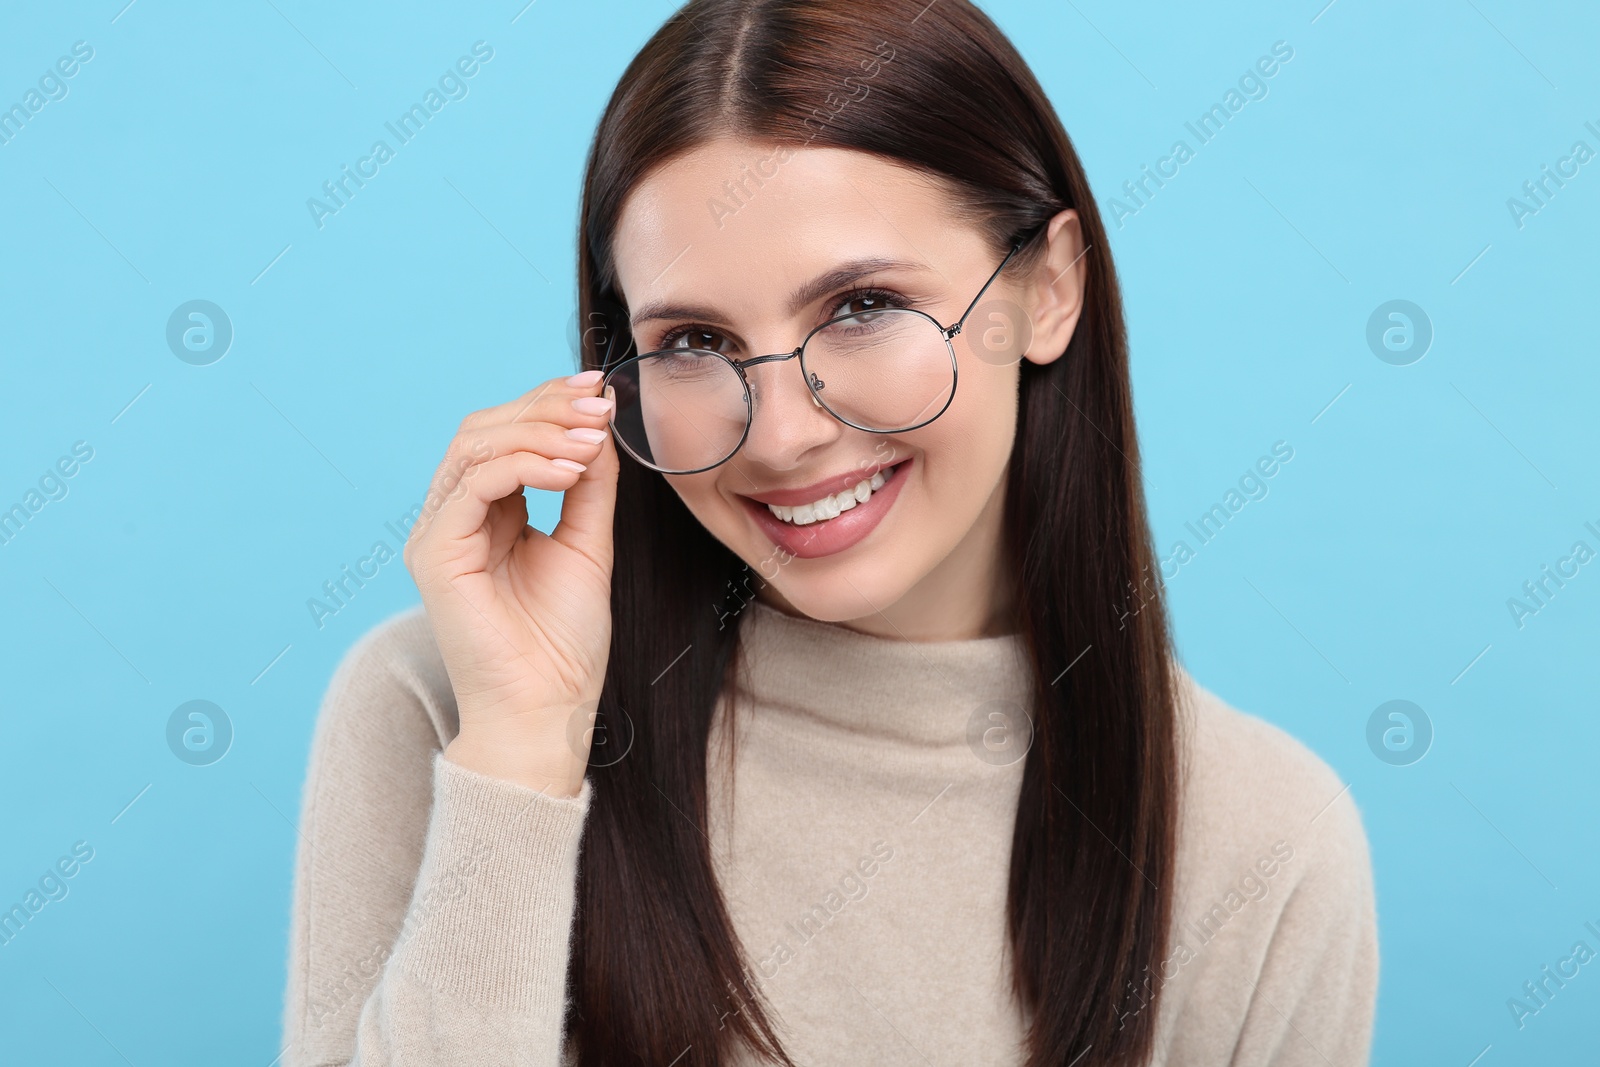 Photo of Portrait of smiling woman in stylish eyeglasses on light blue background